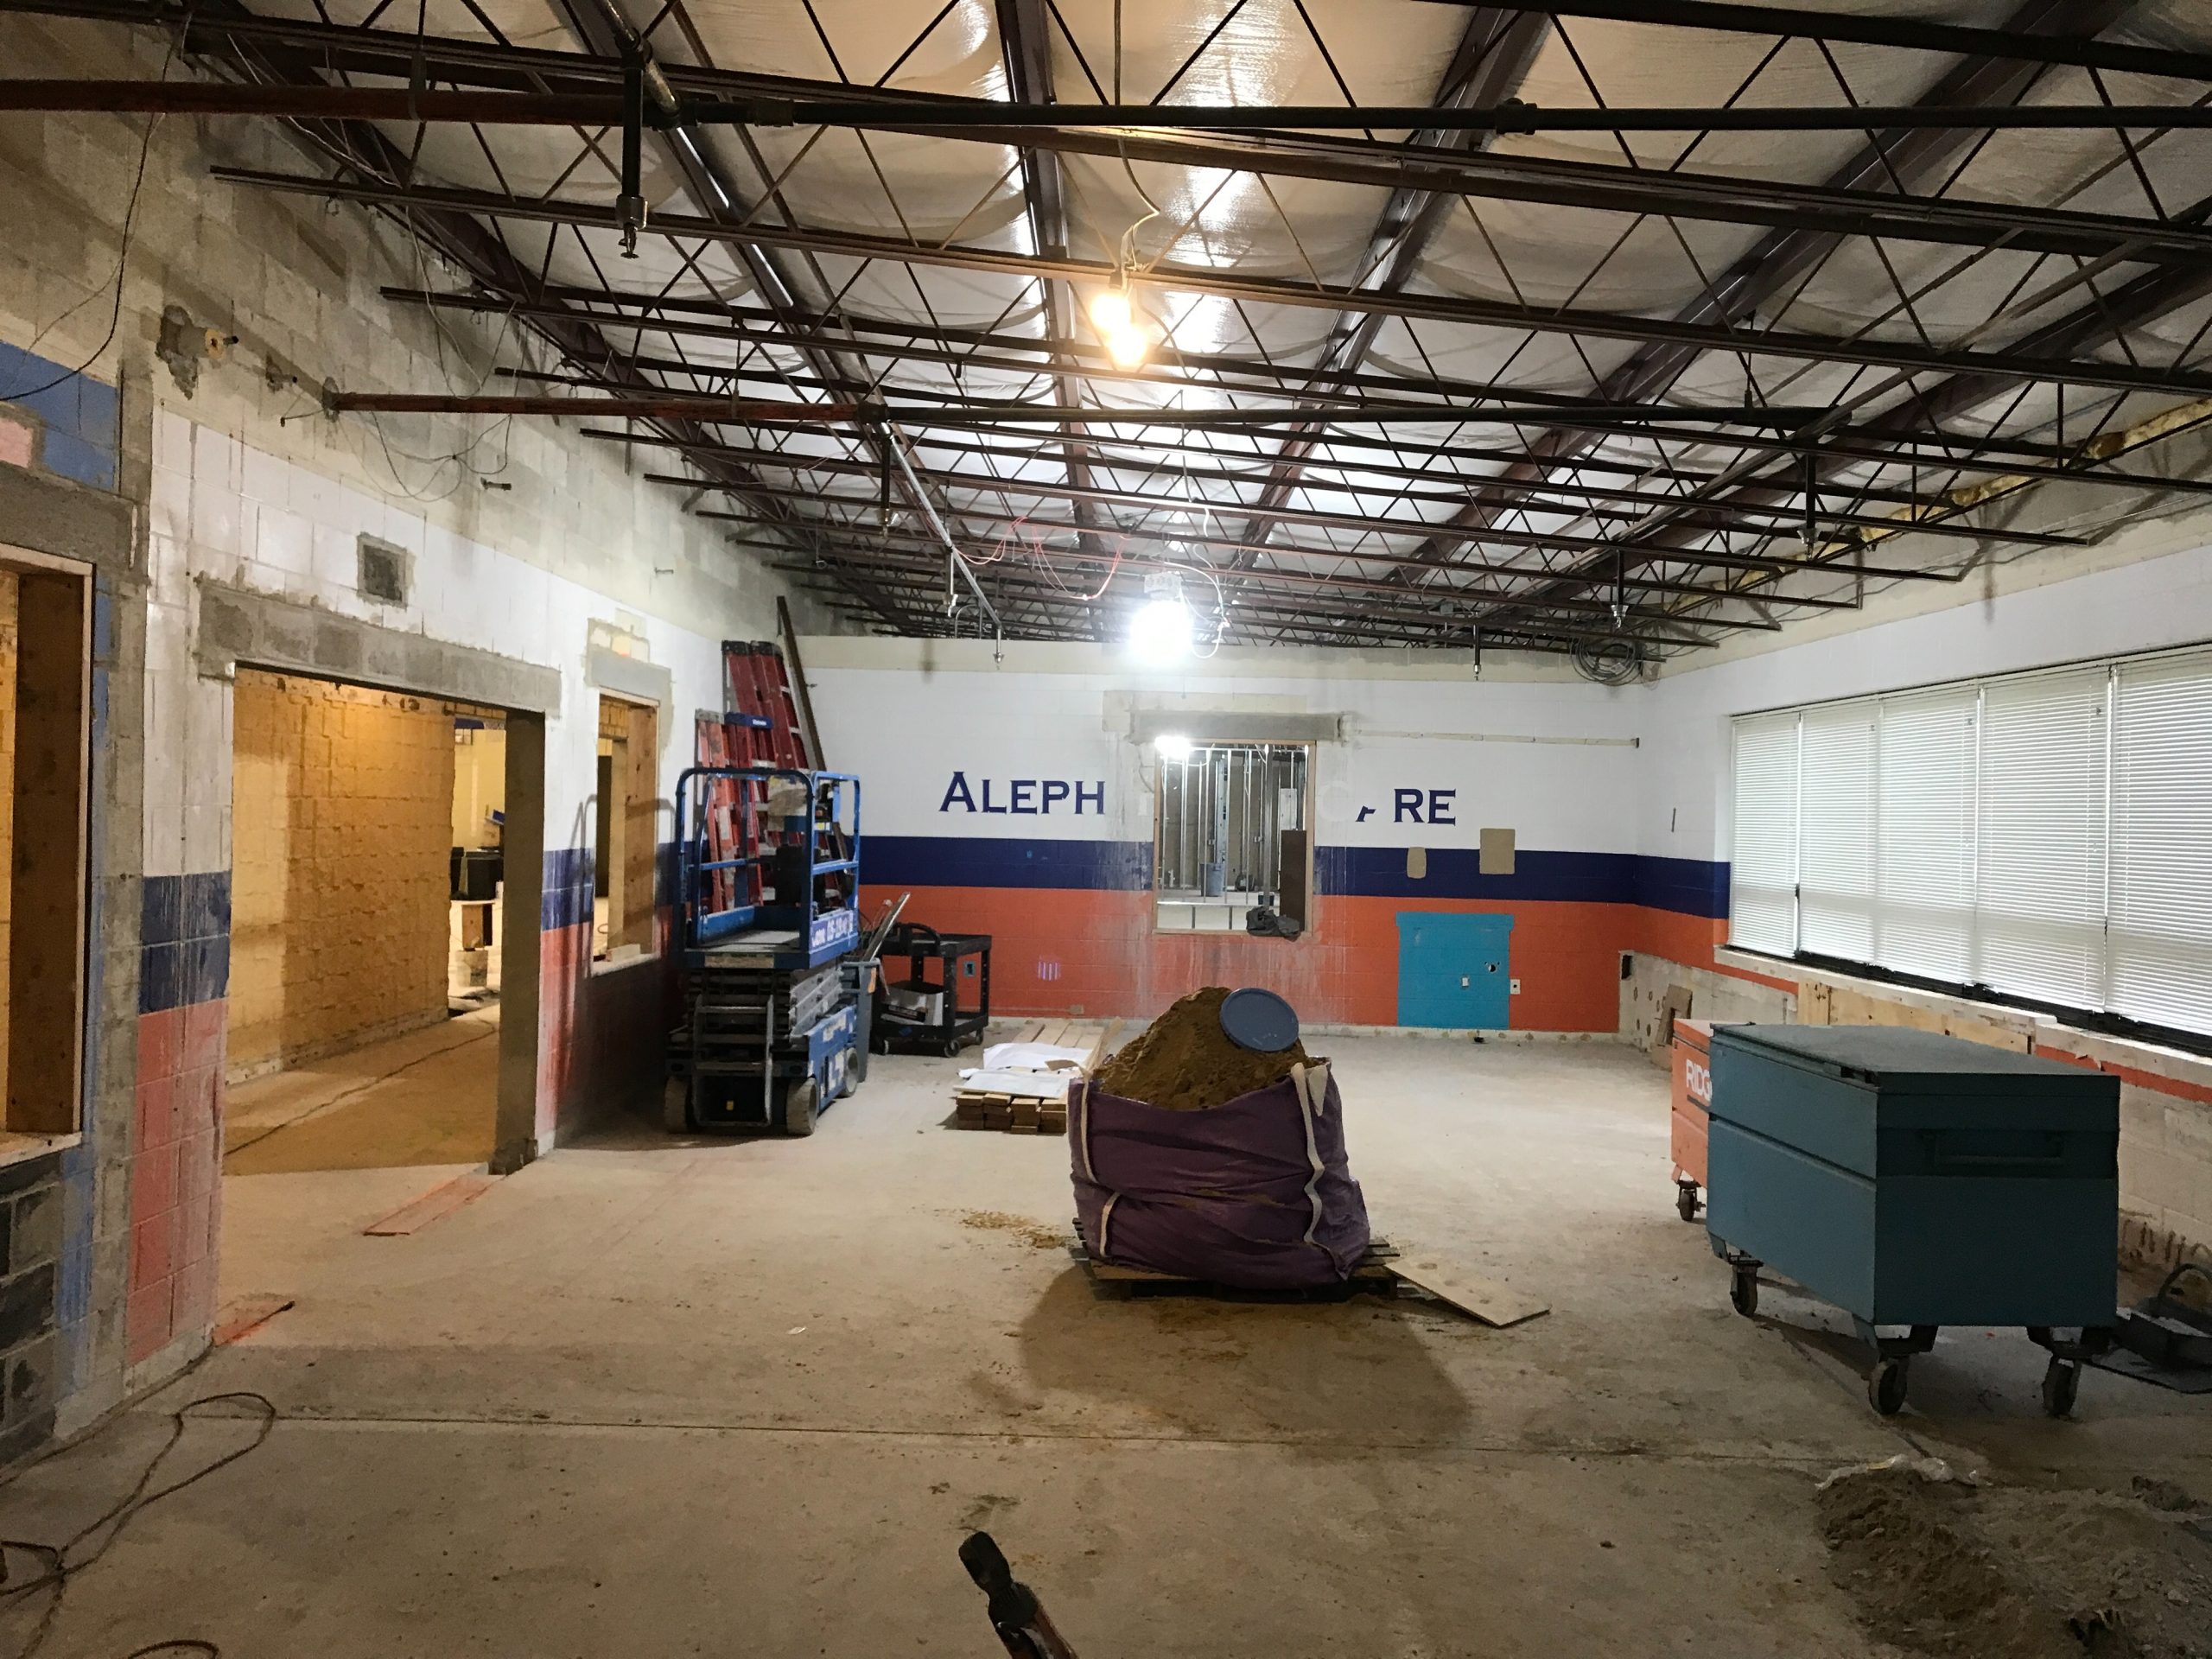 JFSNJ Tops/Aleph Adult Center Under Construction